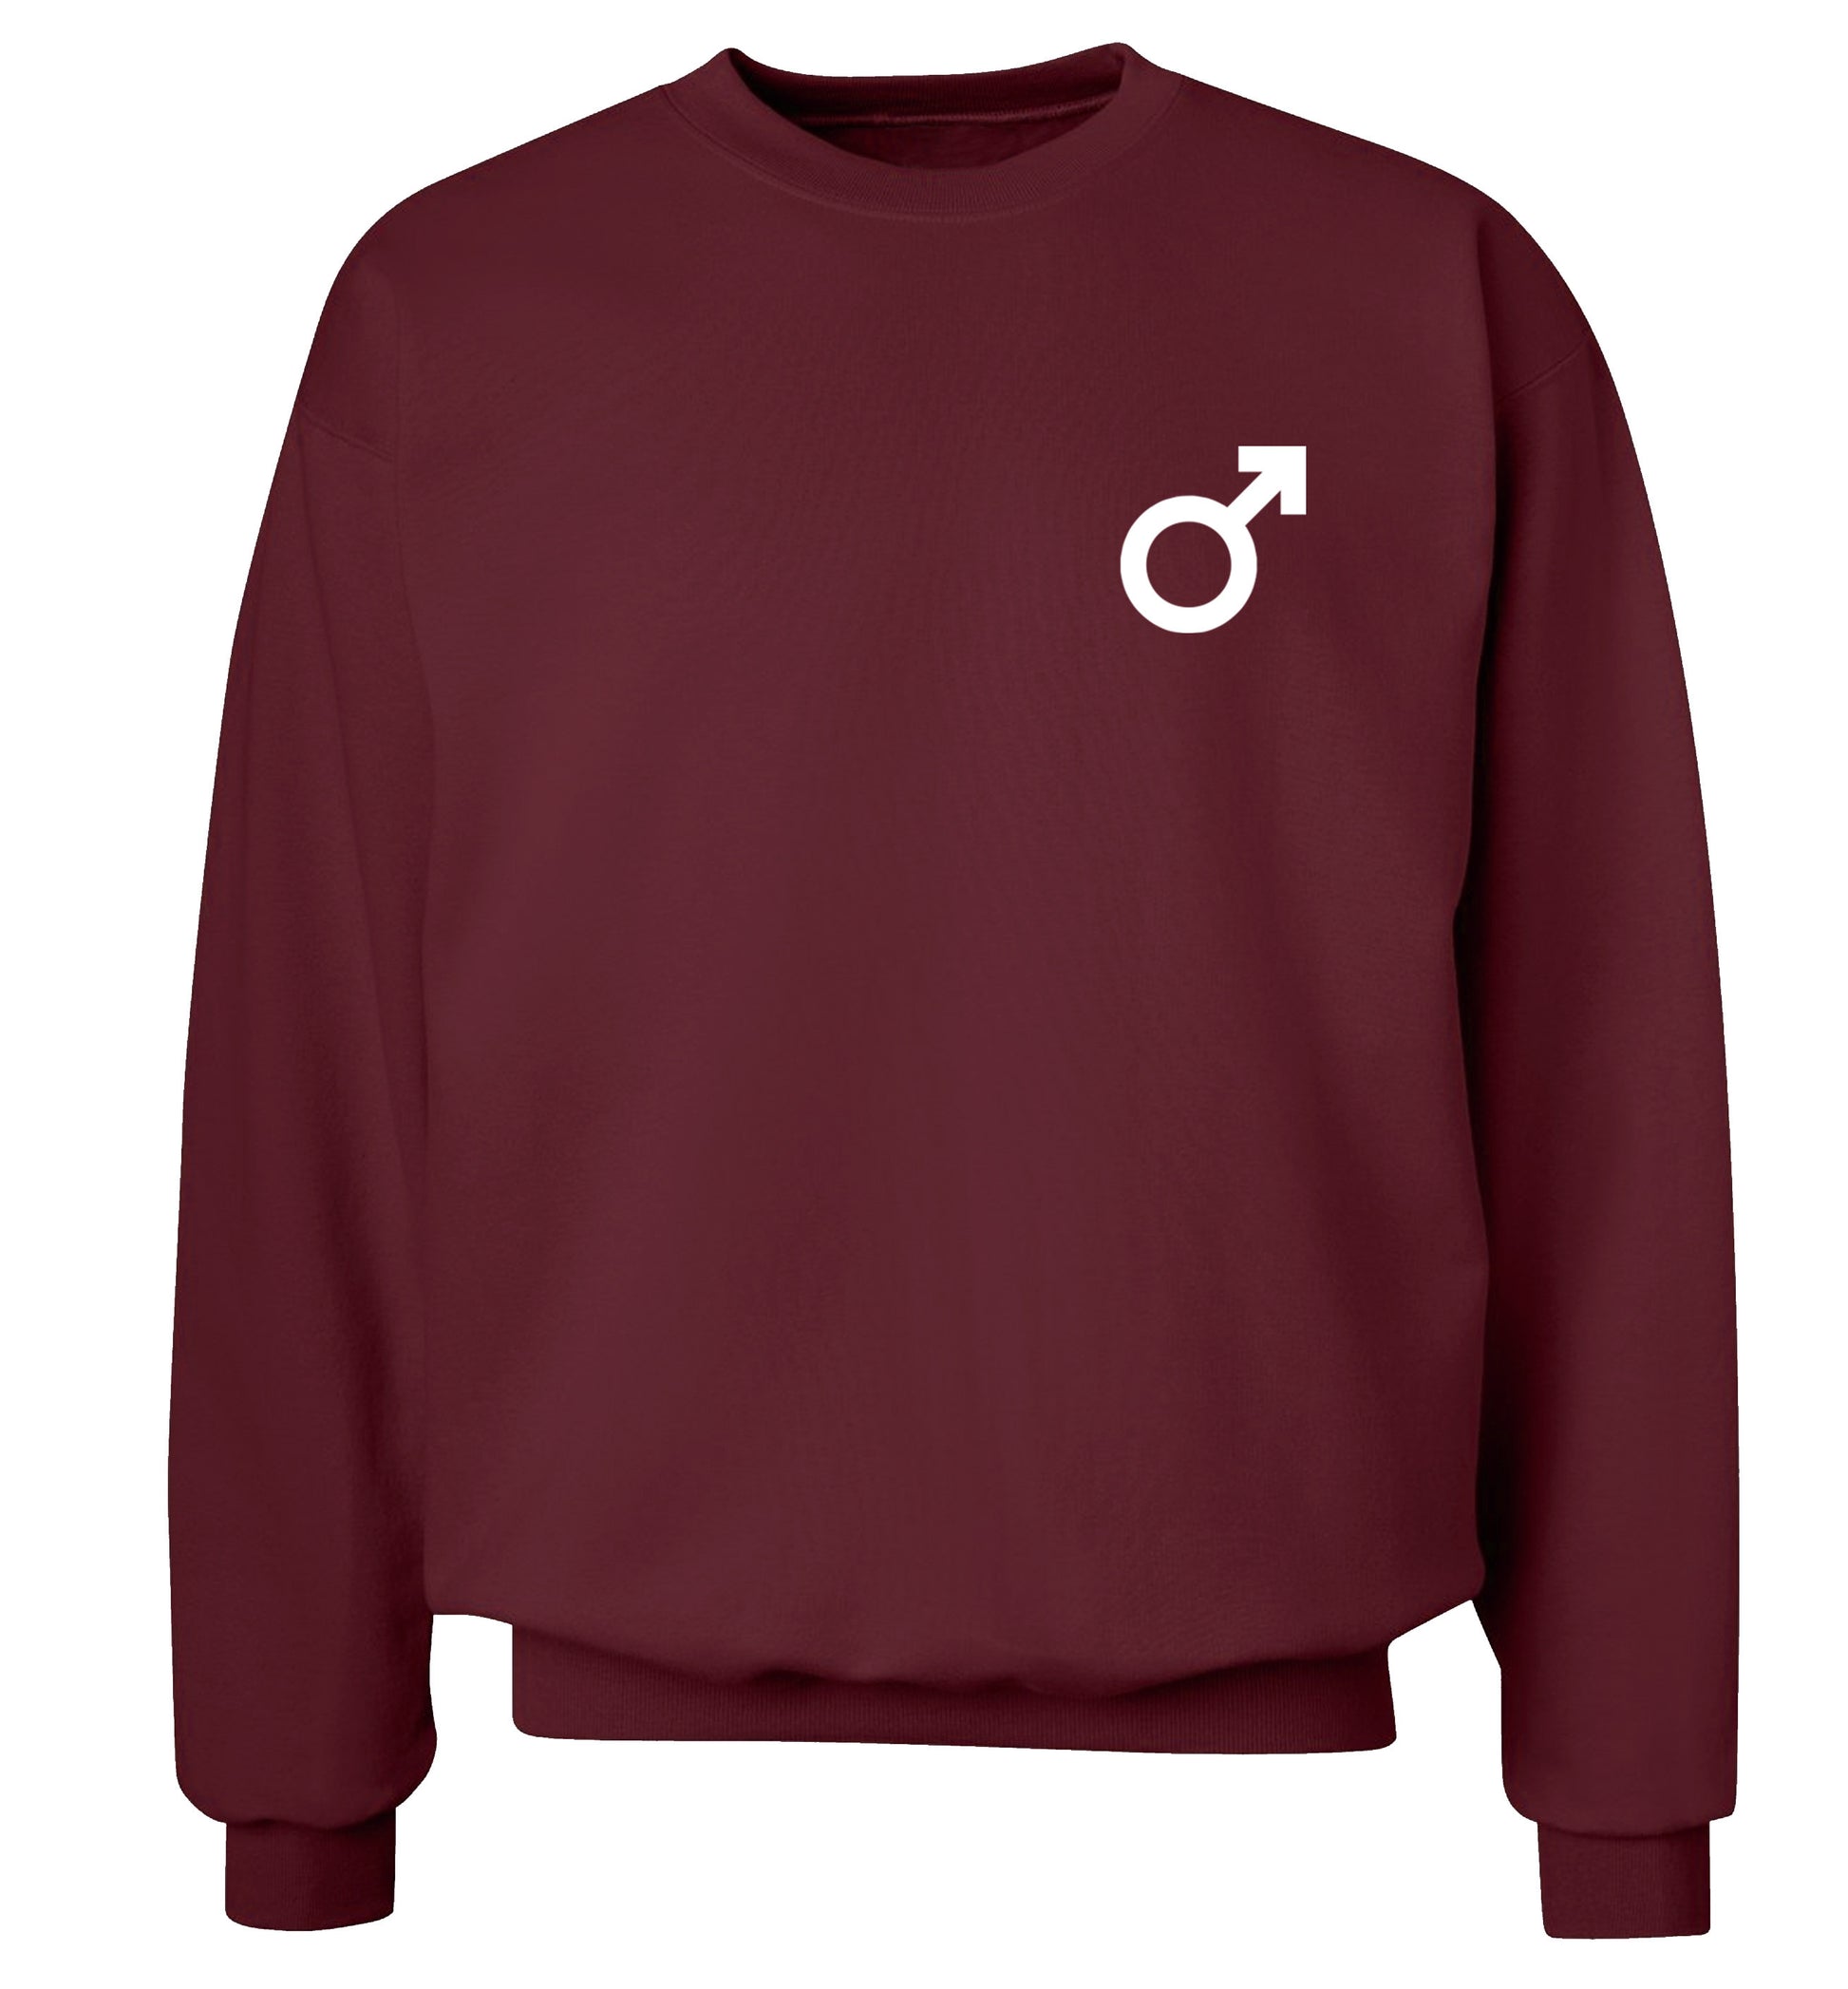 Male symbol pocket Adult's unisex maroon Sweater 2XL